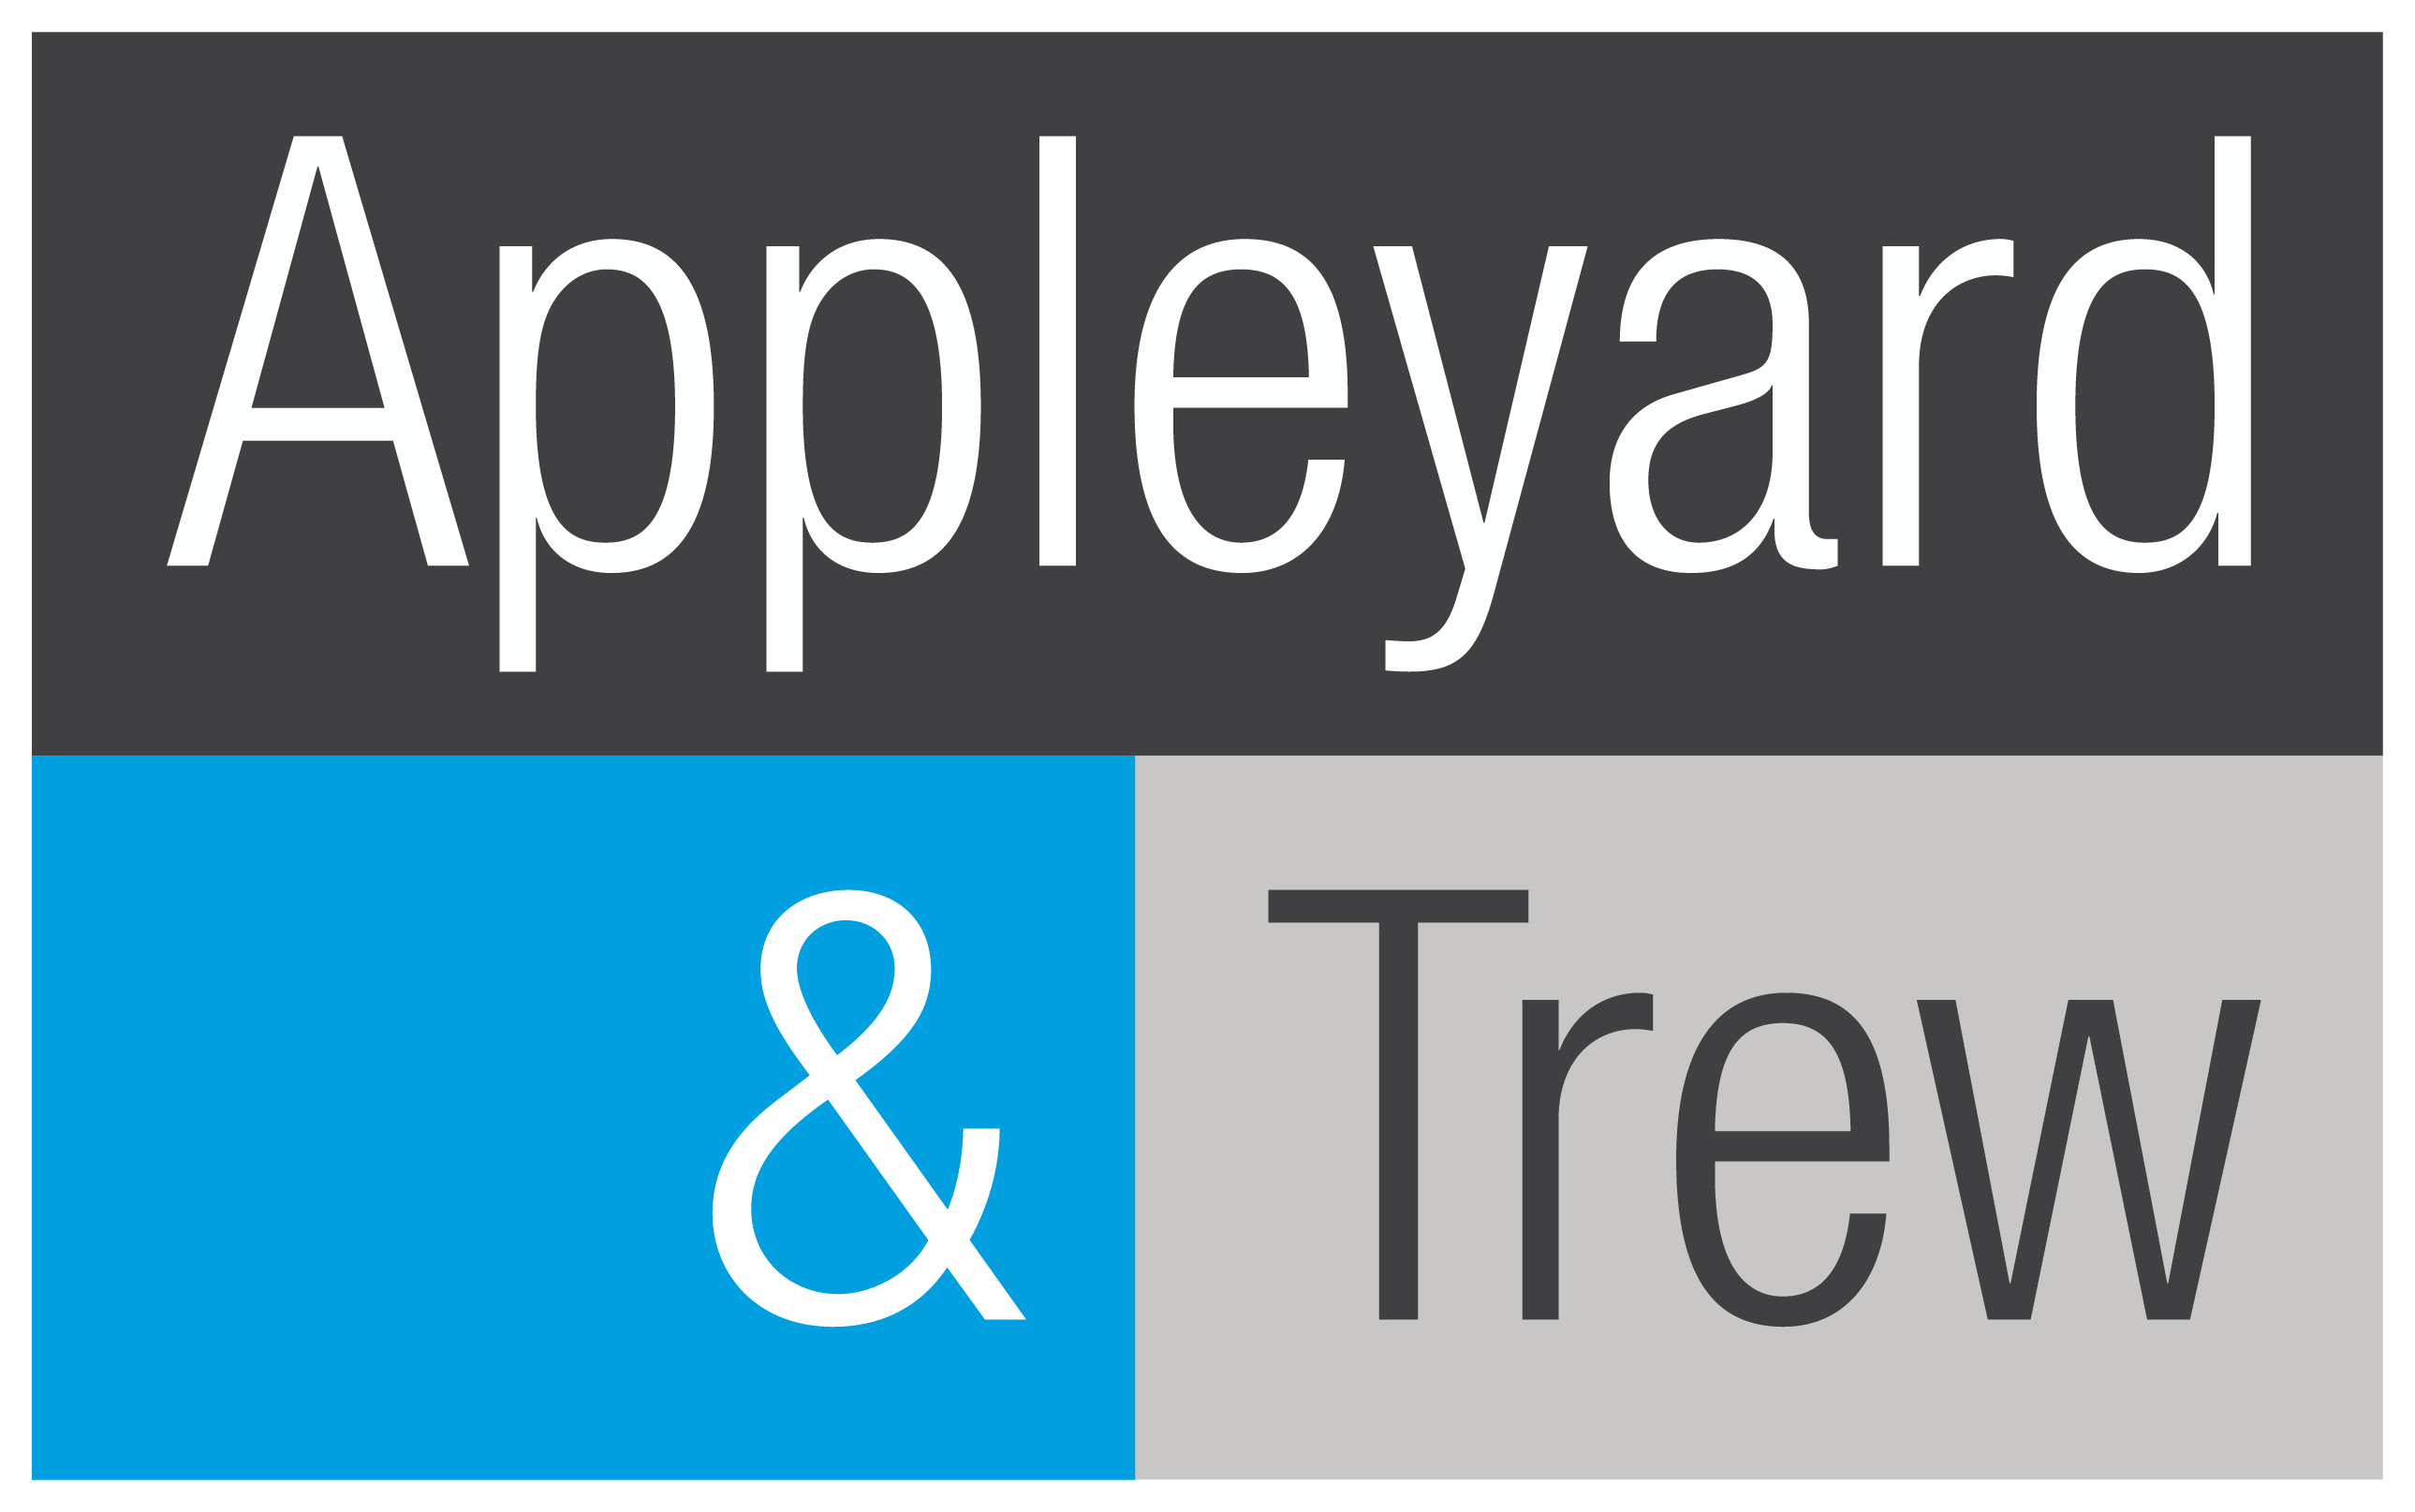 Appleyard and Trew